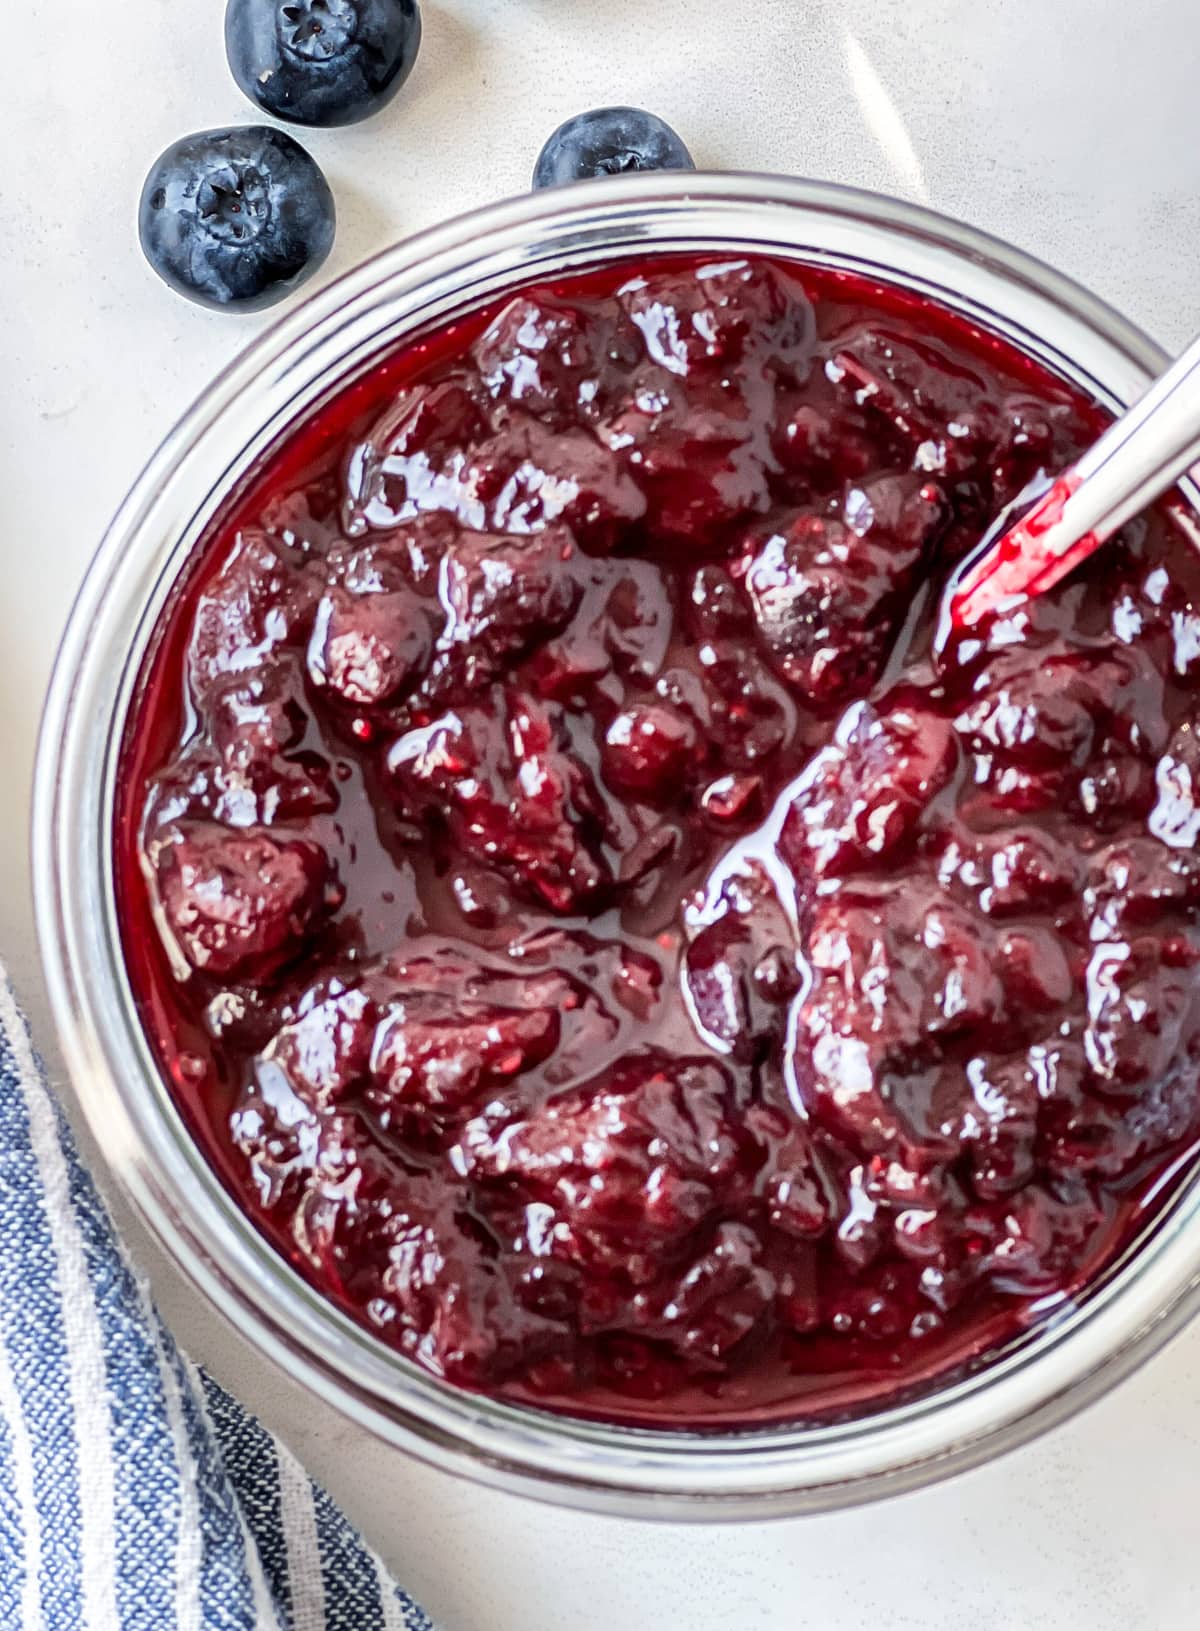 Cherry blueberry jam in a jar.